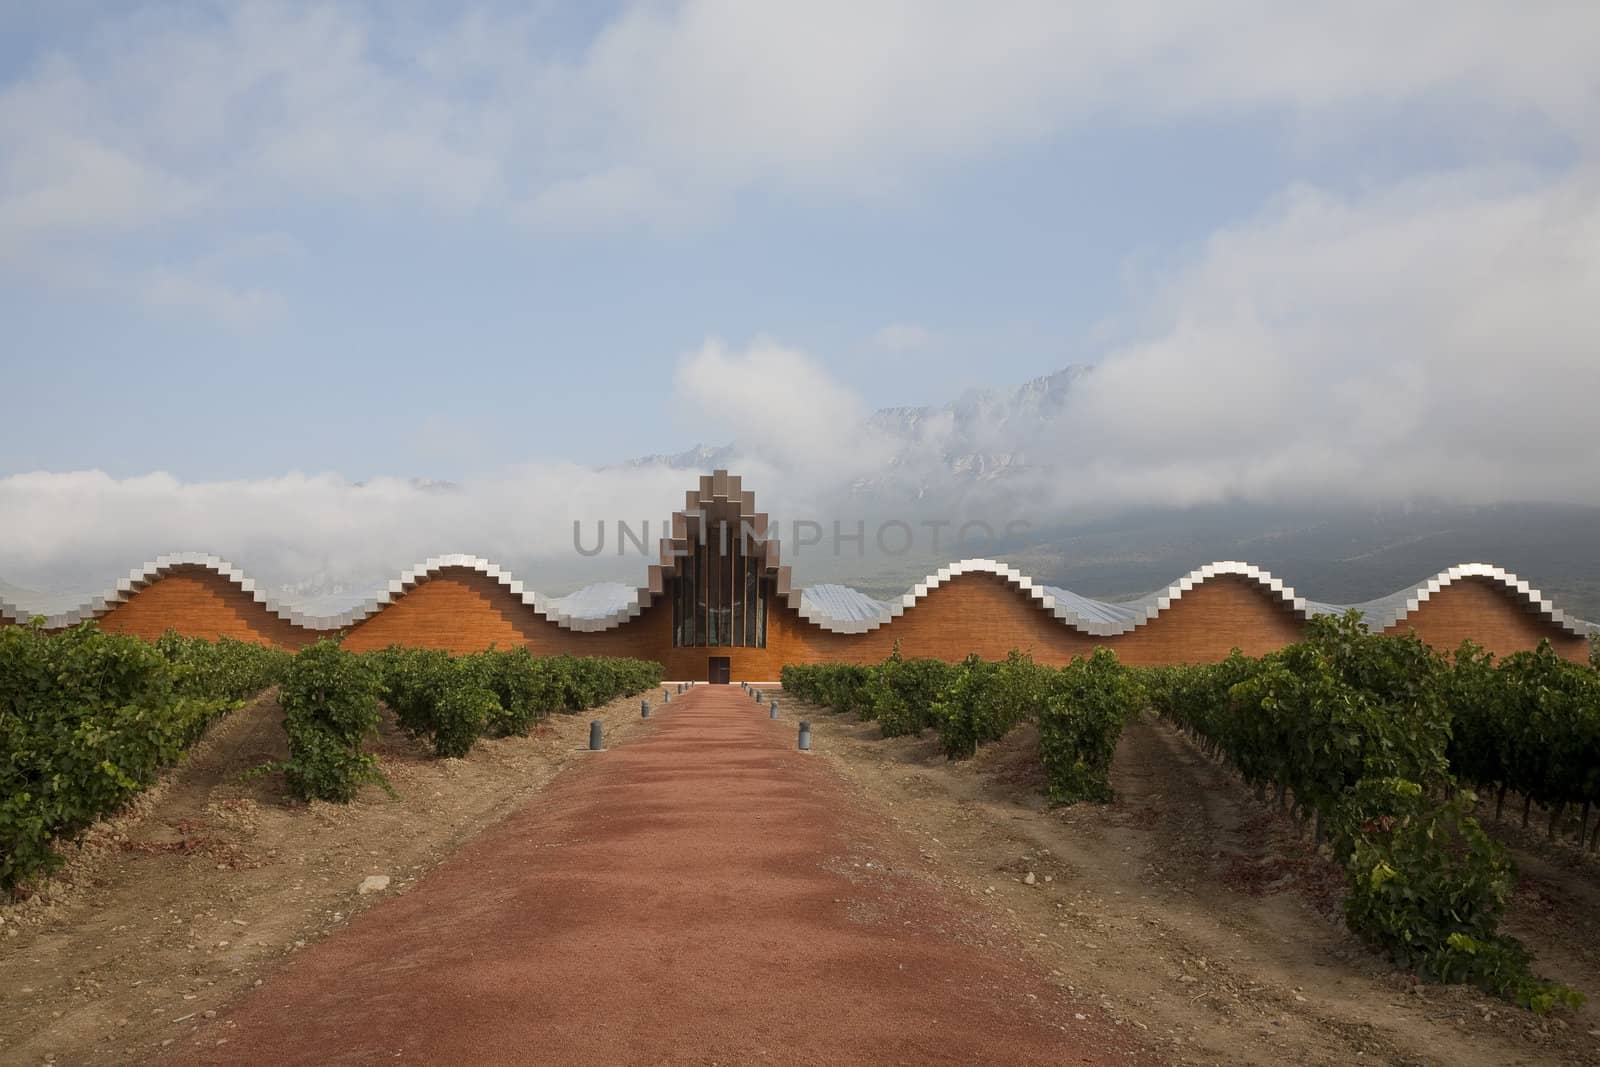 WINERY BEHIND VINEYARD, LA RIOJA, SPAIN � SEPTEMBER 22: Bodegas Ysios, Laguardia, La Rioja, Spain view on September 22, 2012. Santiago Calatrava designed the modern winery in the hills of Sierra de Cantabria for Ysios.